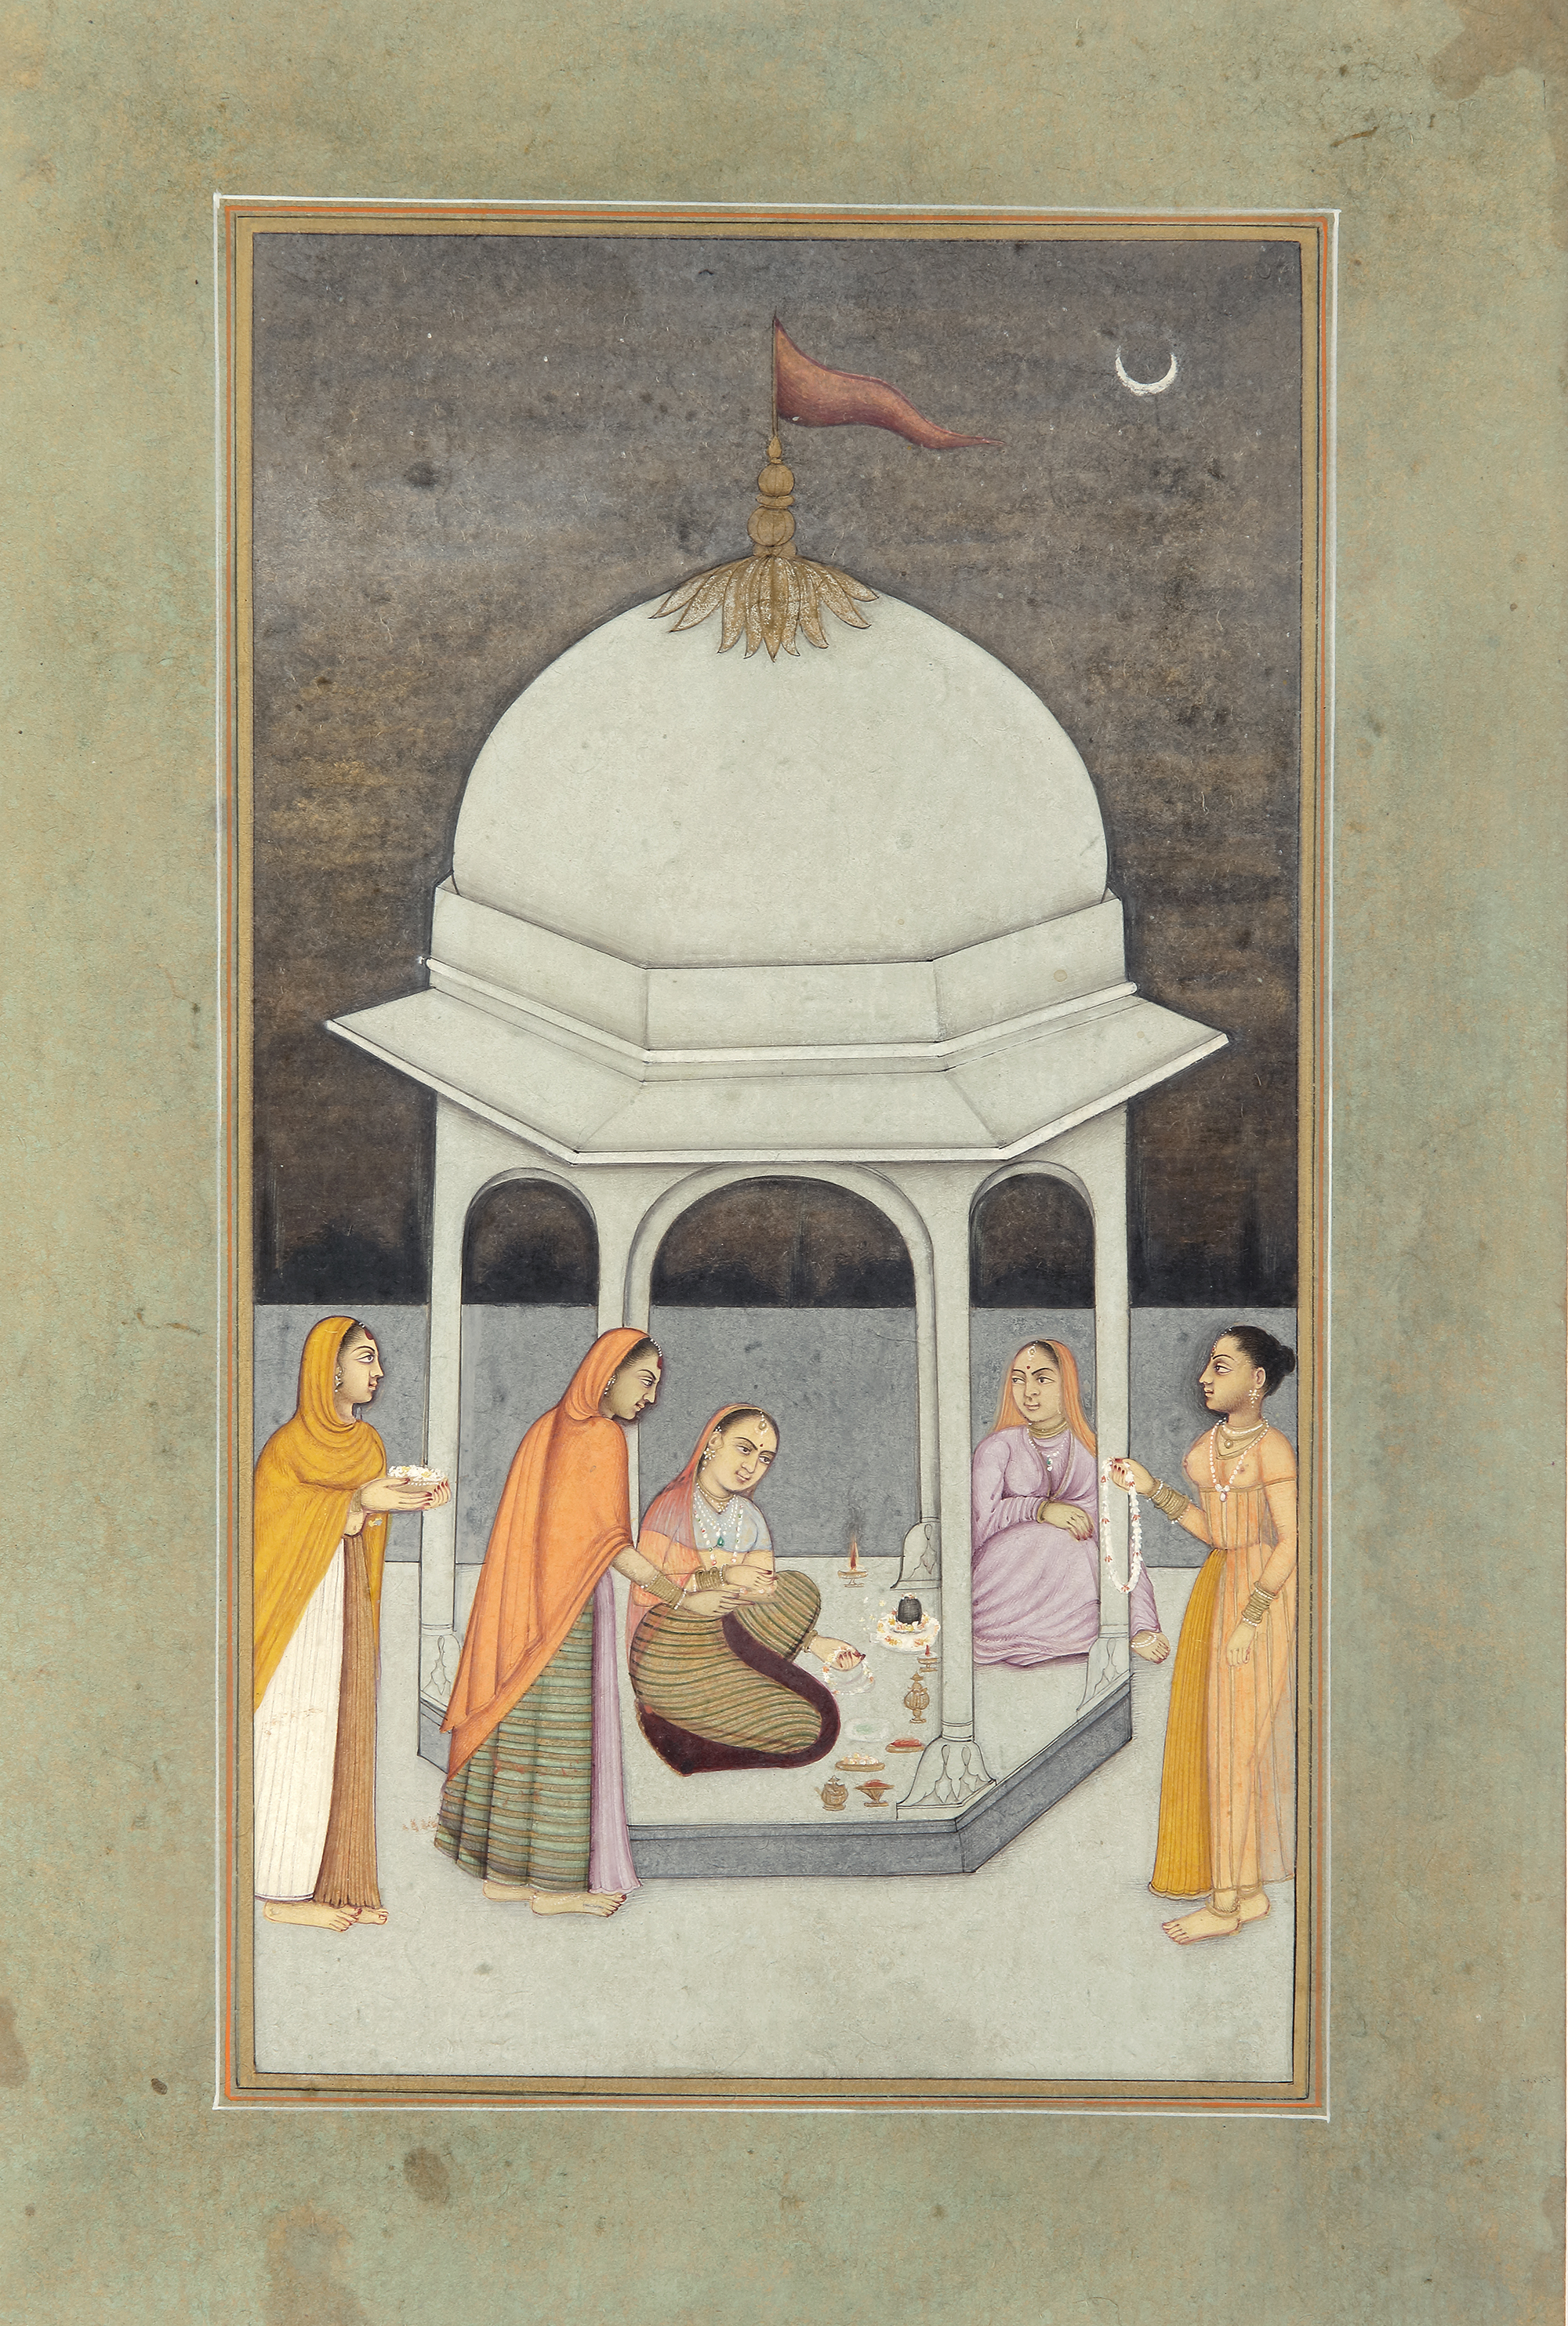 LADIES VISITING A SHRINE AT NIGHT UNDER A CANOPY, BIKANER, RAJASTHAN, NORTH INDIA, CIRCA 1780 - Image 4 of 4